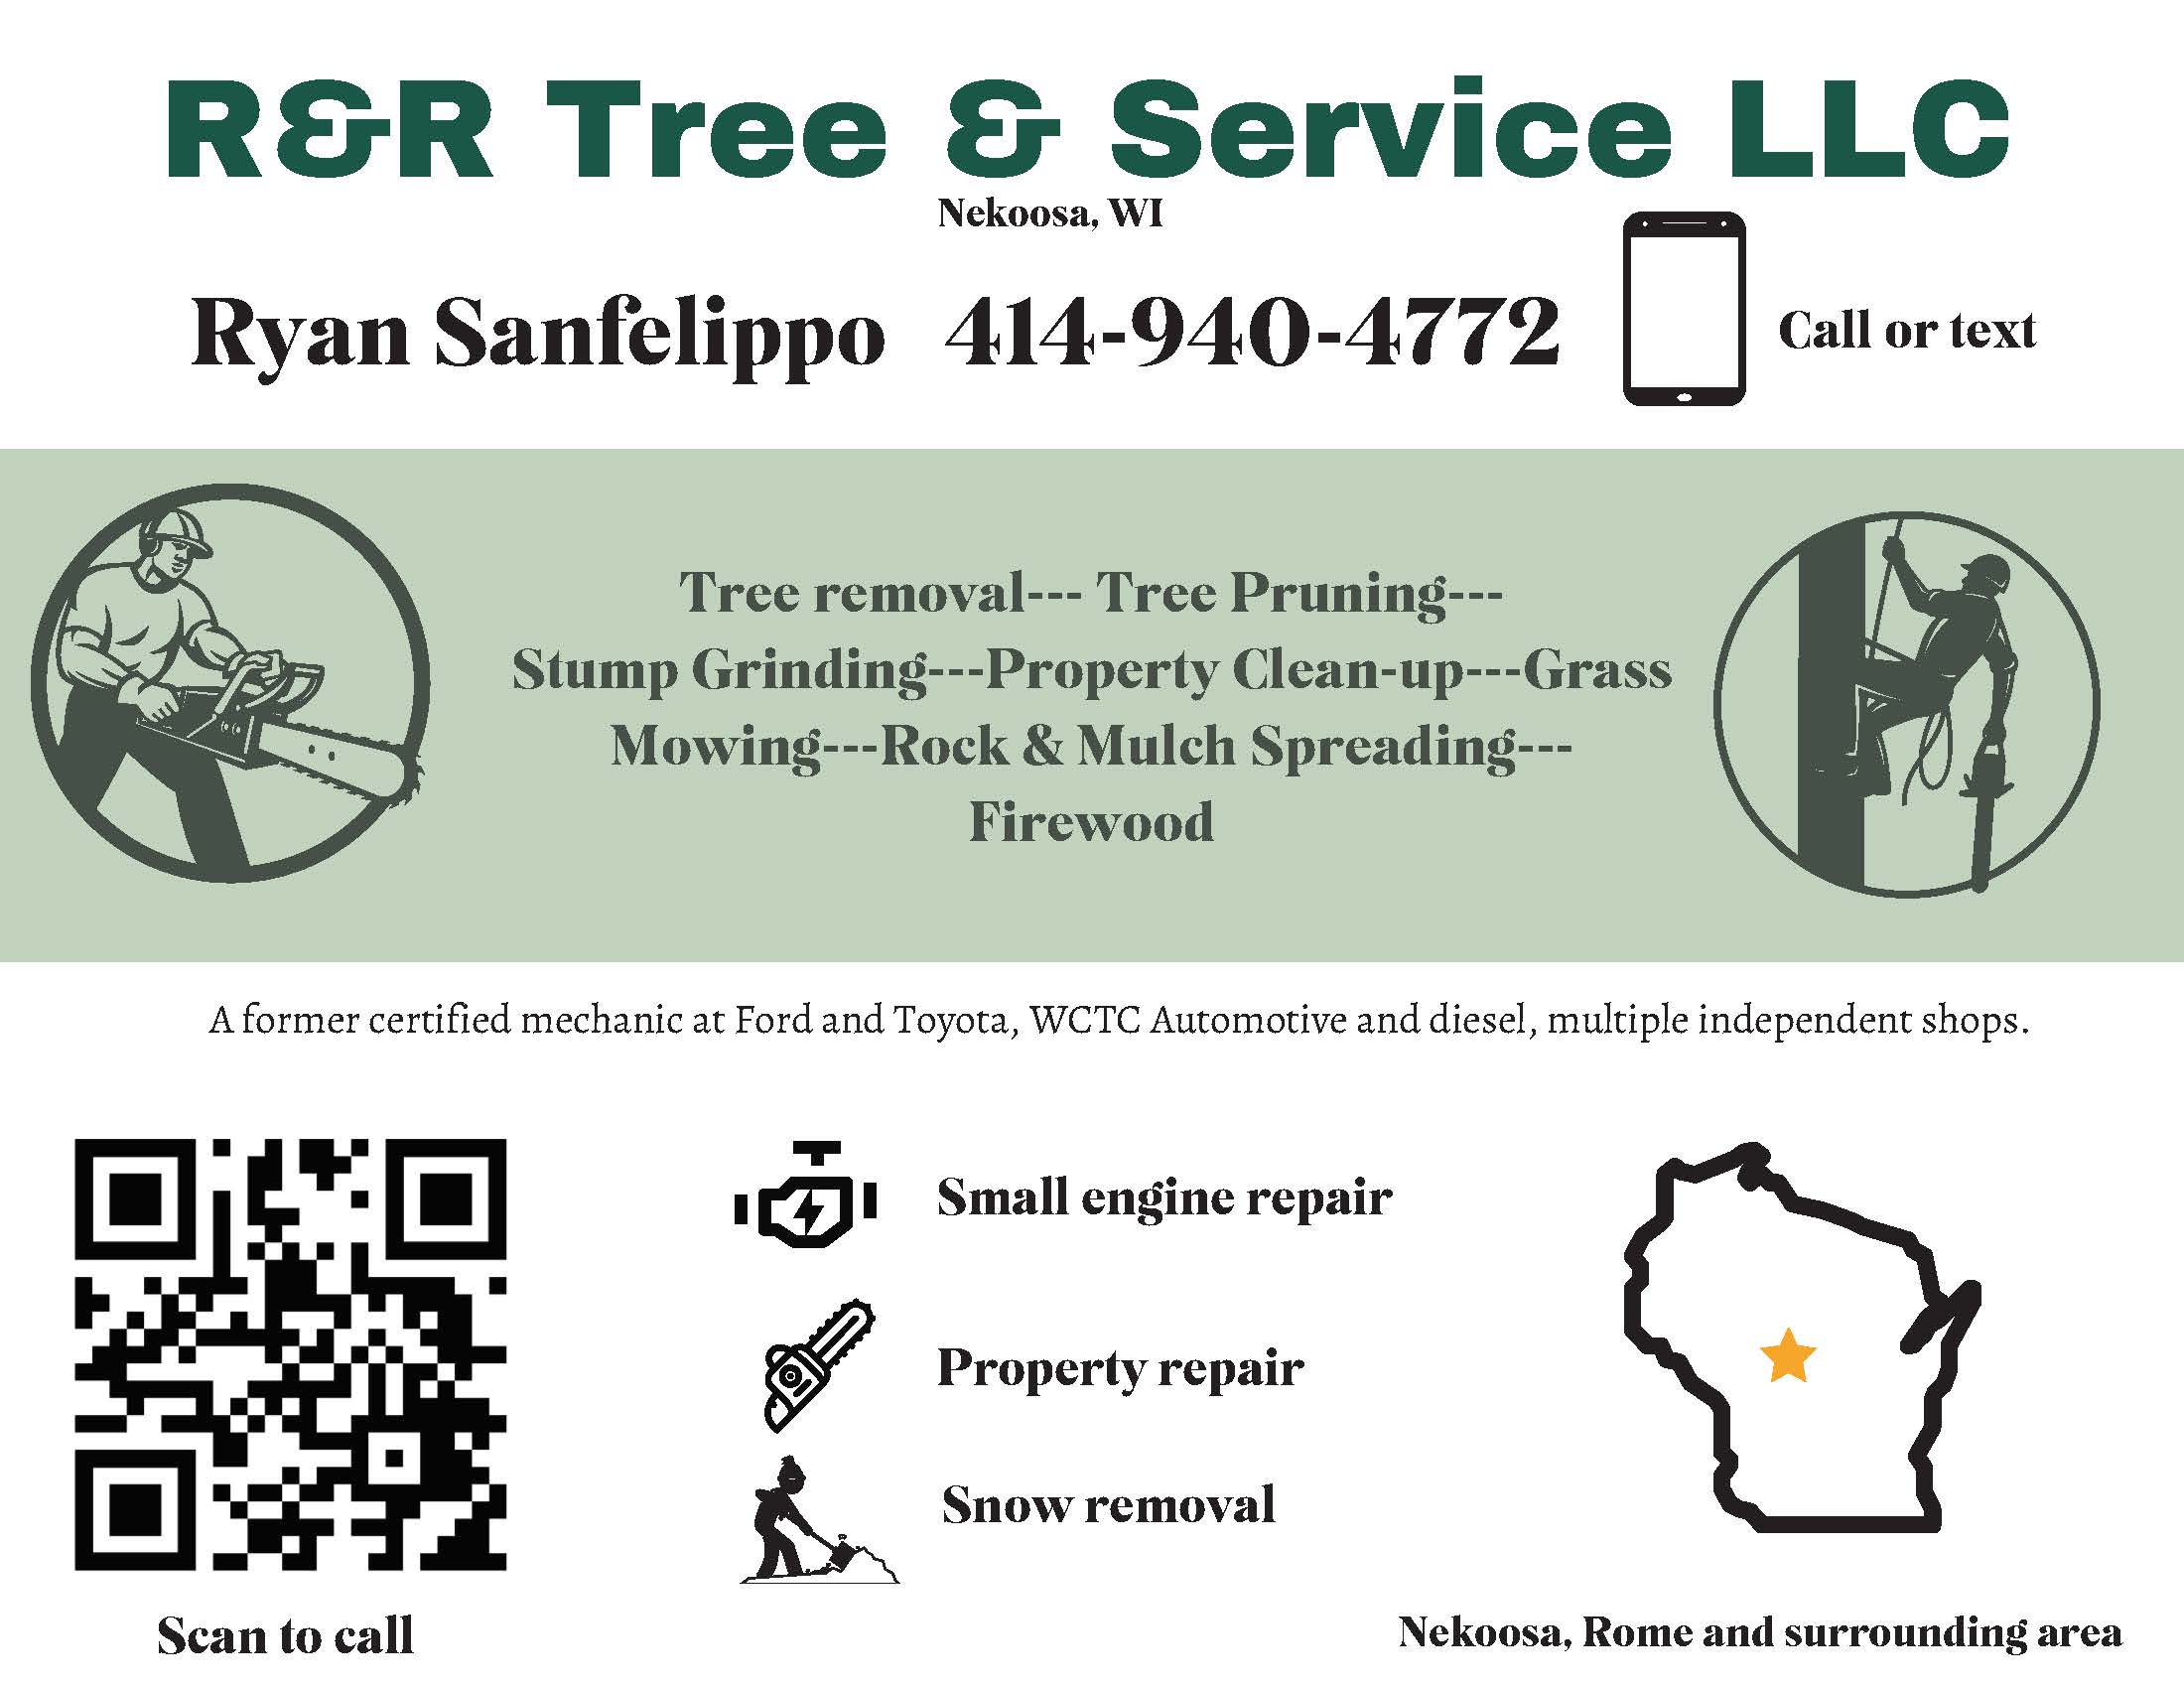 R&R Tree & Service - Ryan Sanfelippo